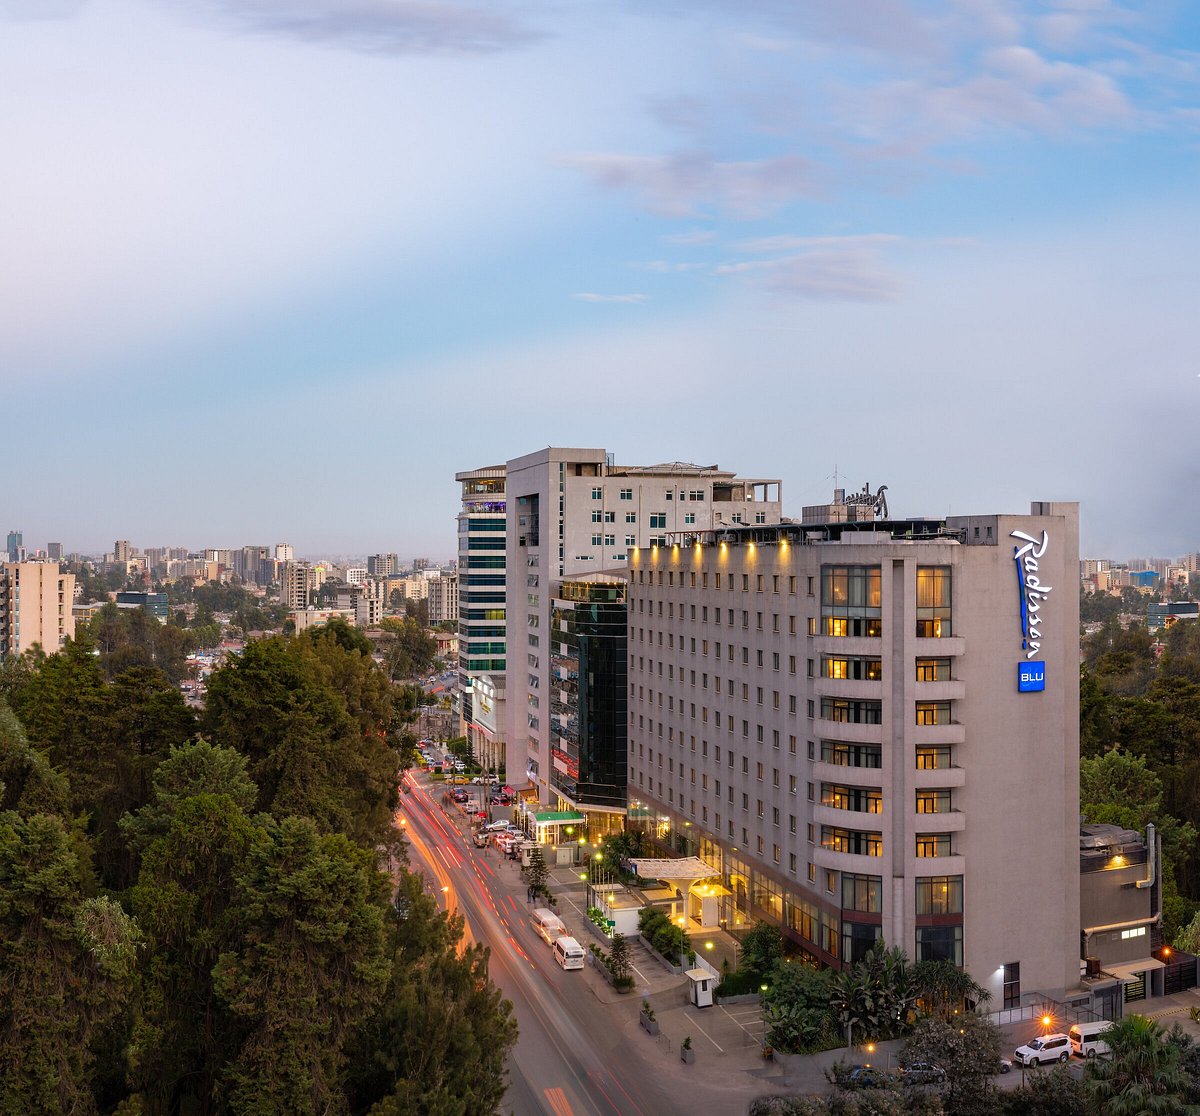 Hotel In Addis Ababa THE BEST Best Western Hotels in Addis Ababa, Ethiopia - Tripadvisor